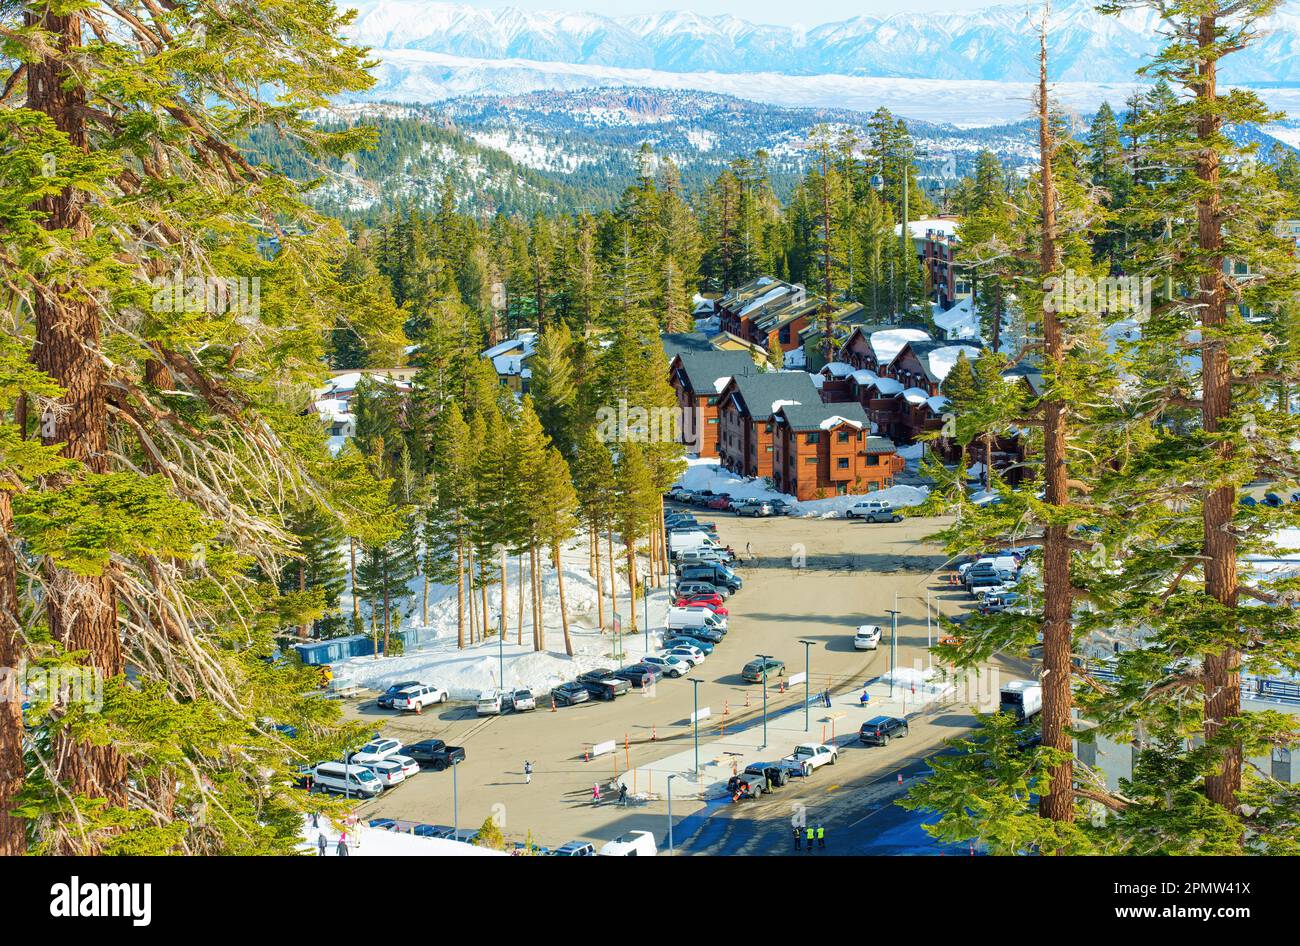 California, USA - December 24, 2022: Mammoth Mountain Ski Resort Village seen from the hill top. Stock Photo